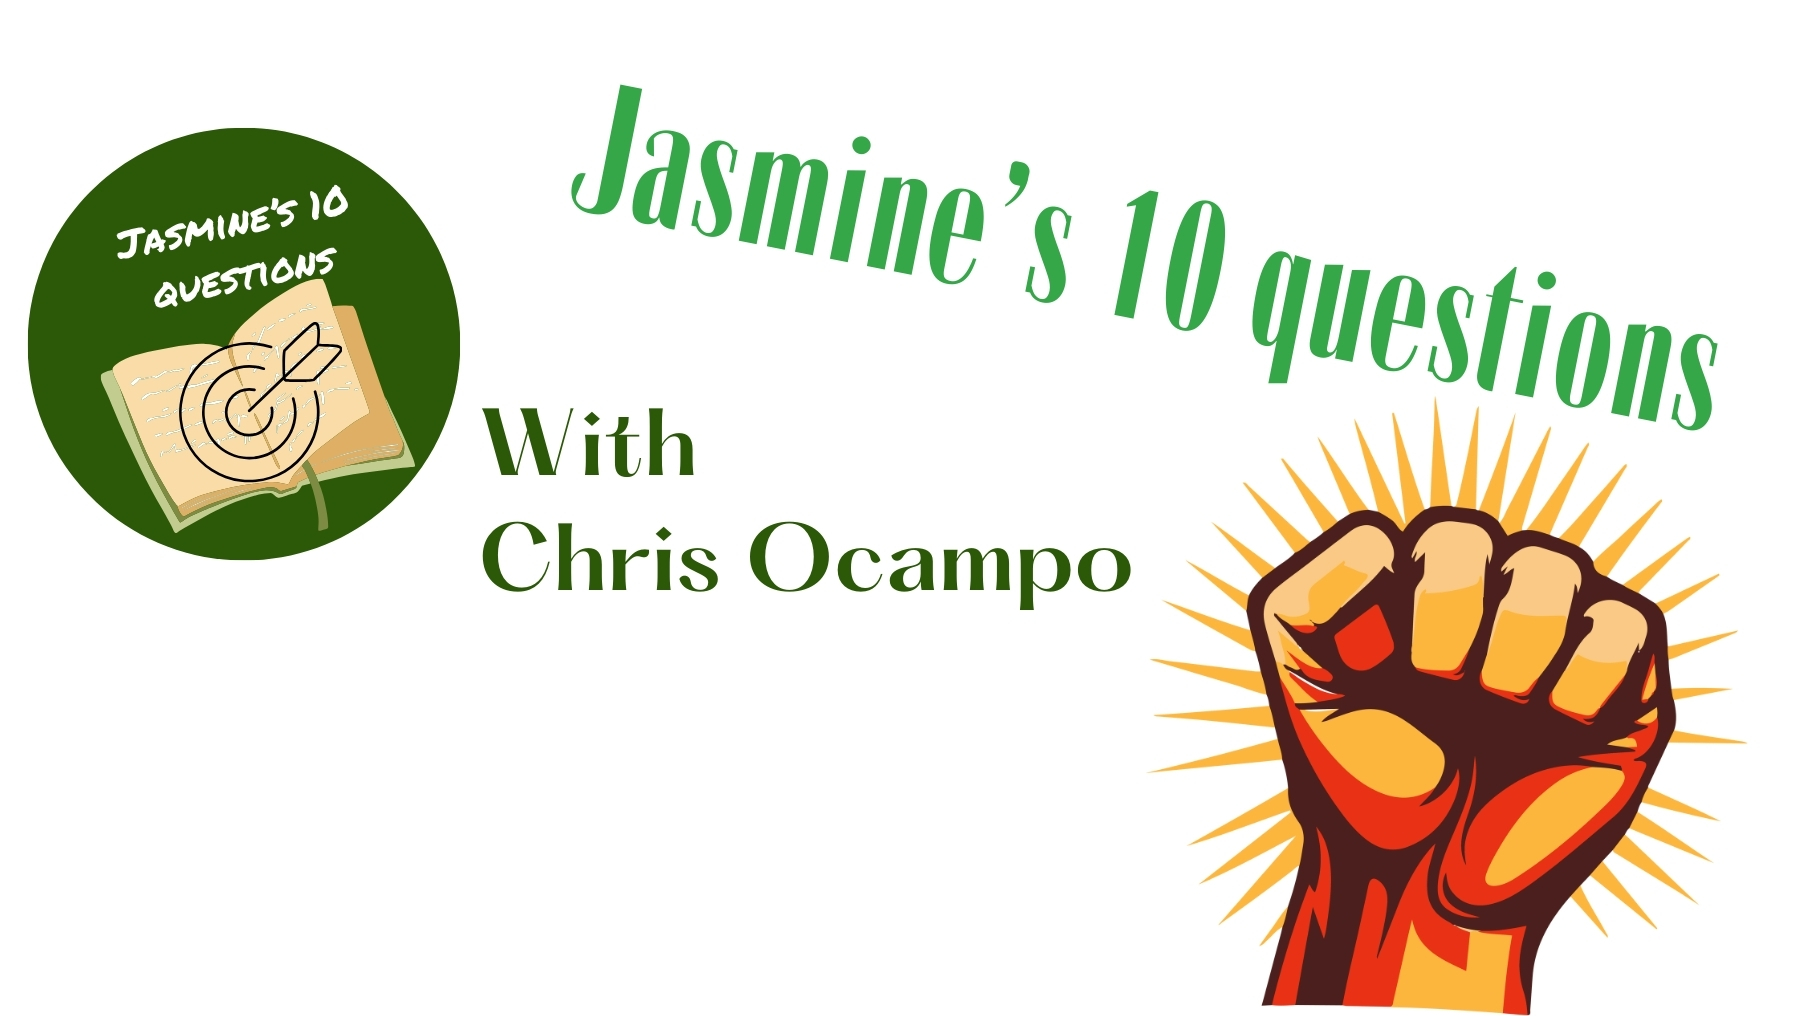 Jasmine’s 10 questions